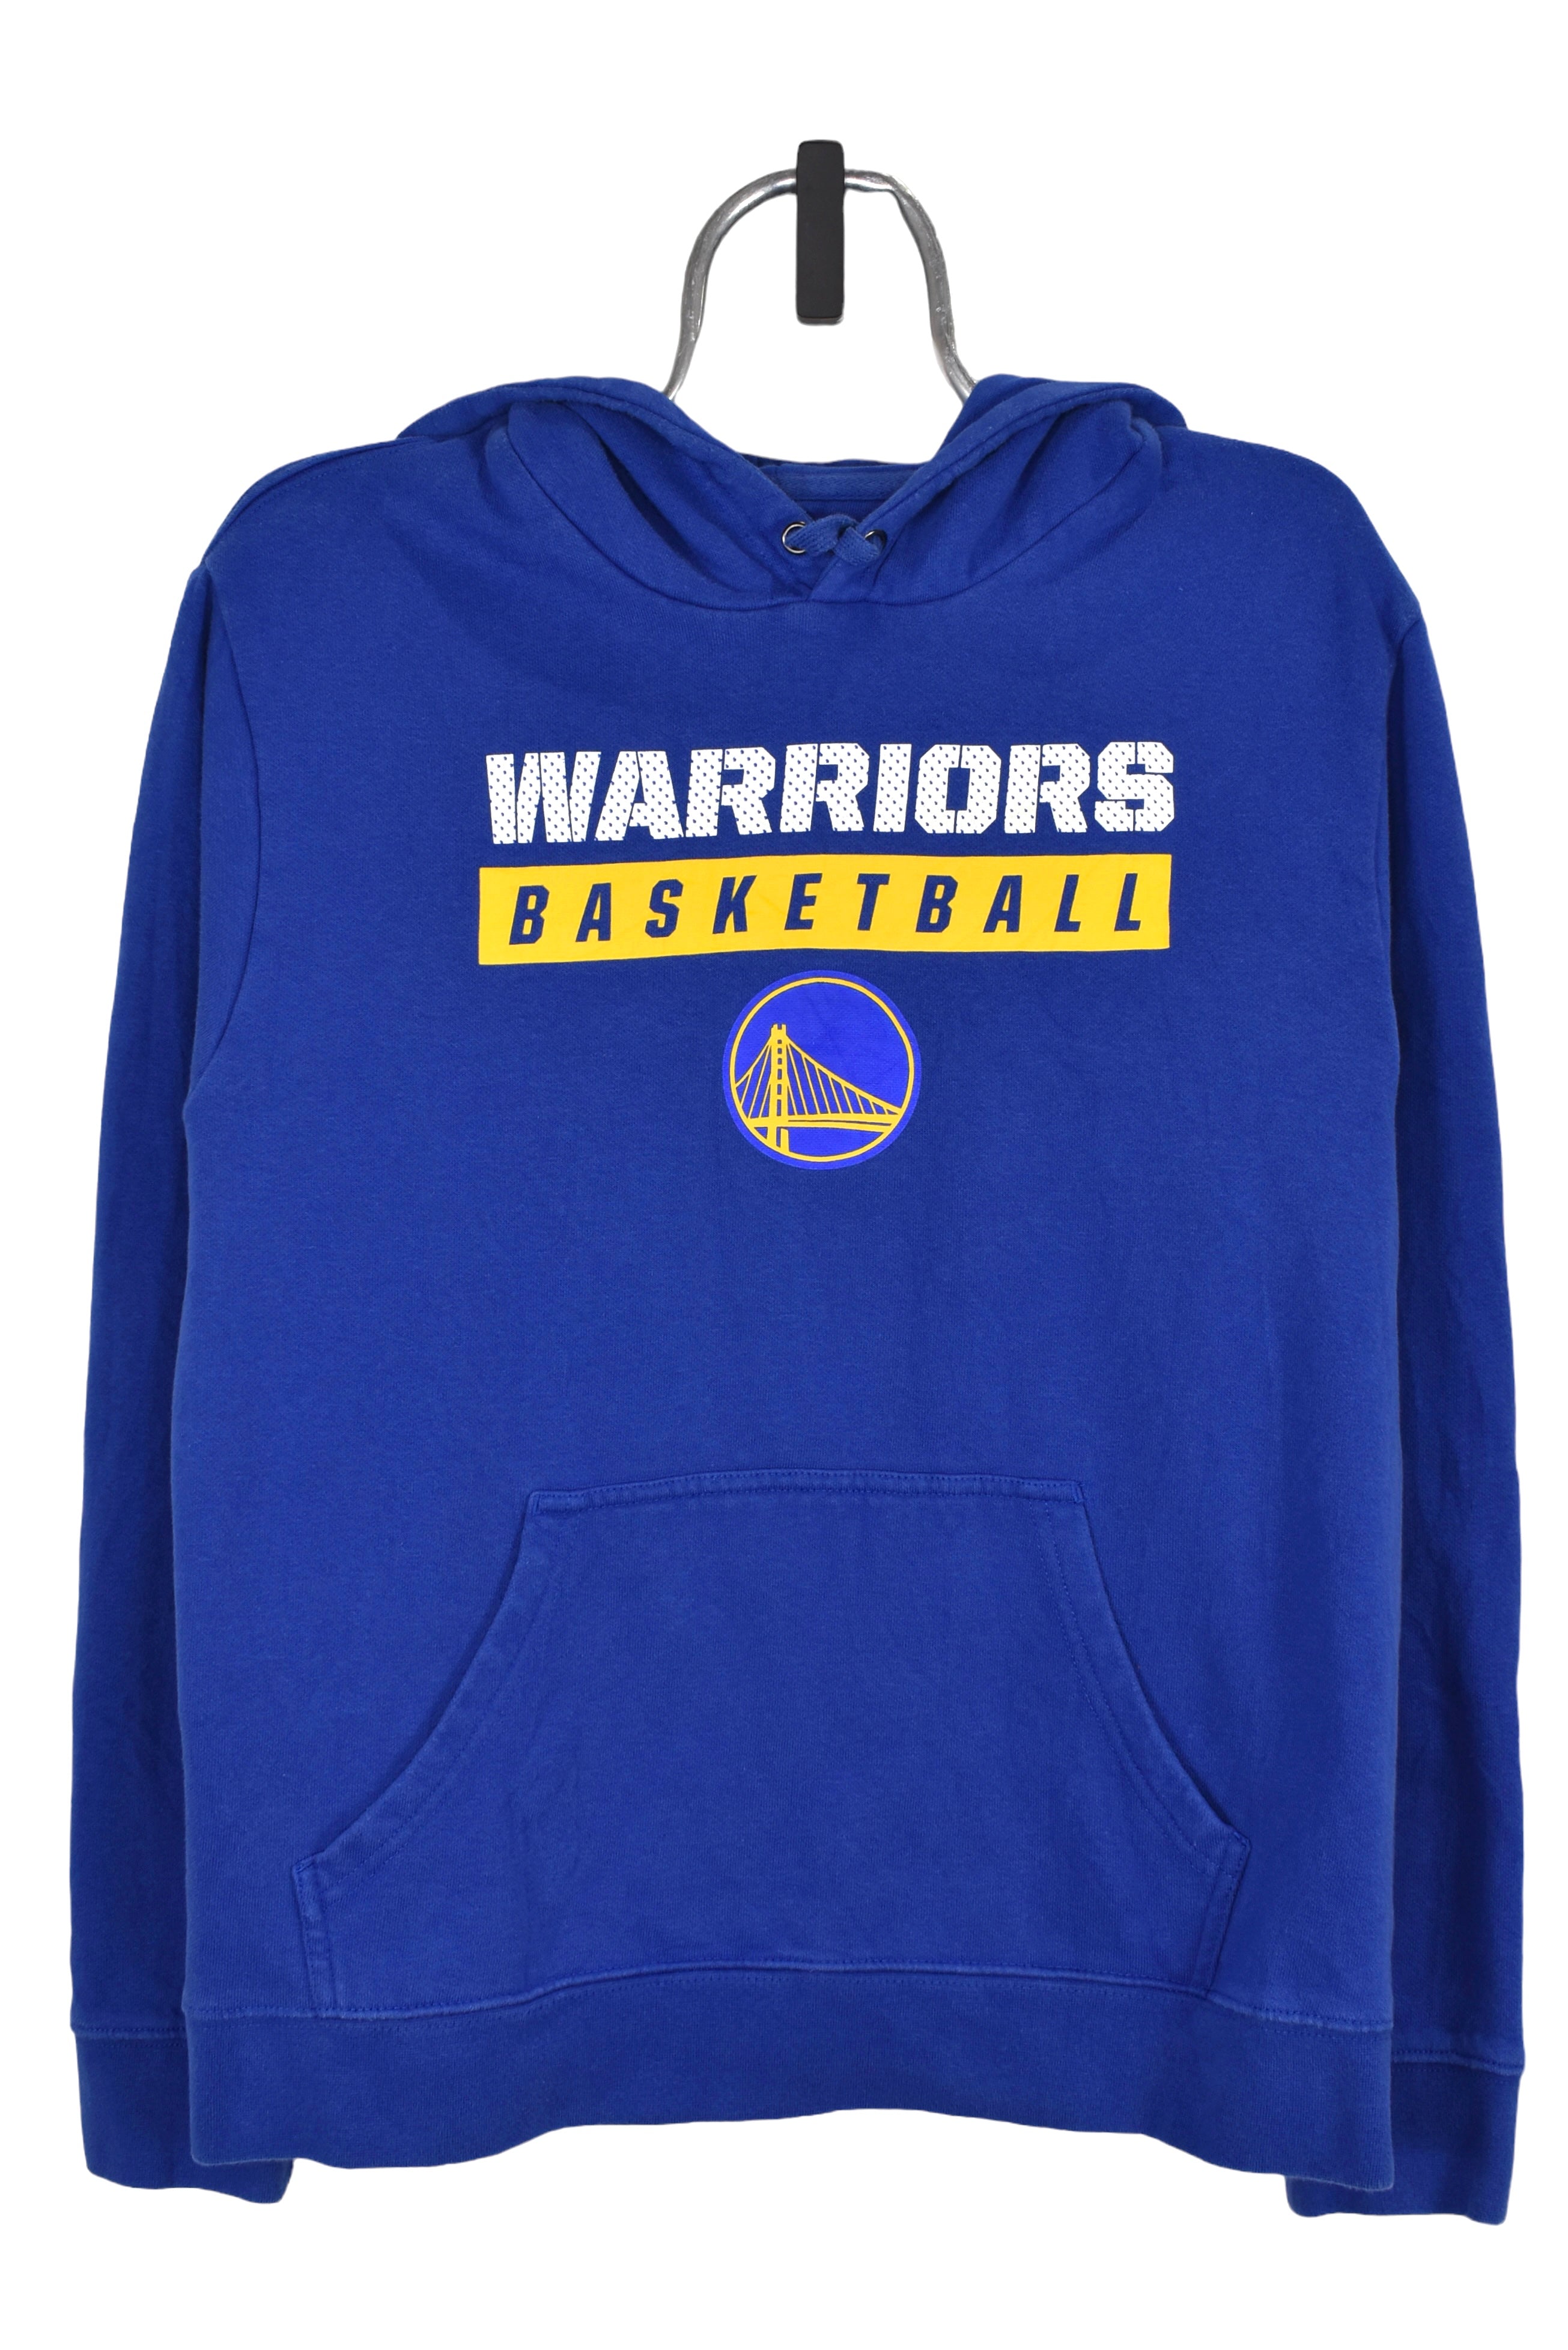 Modern Golden State Warriors hoodie (M), blue NBA graphic sweatshirt